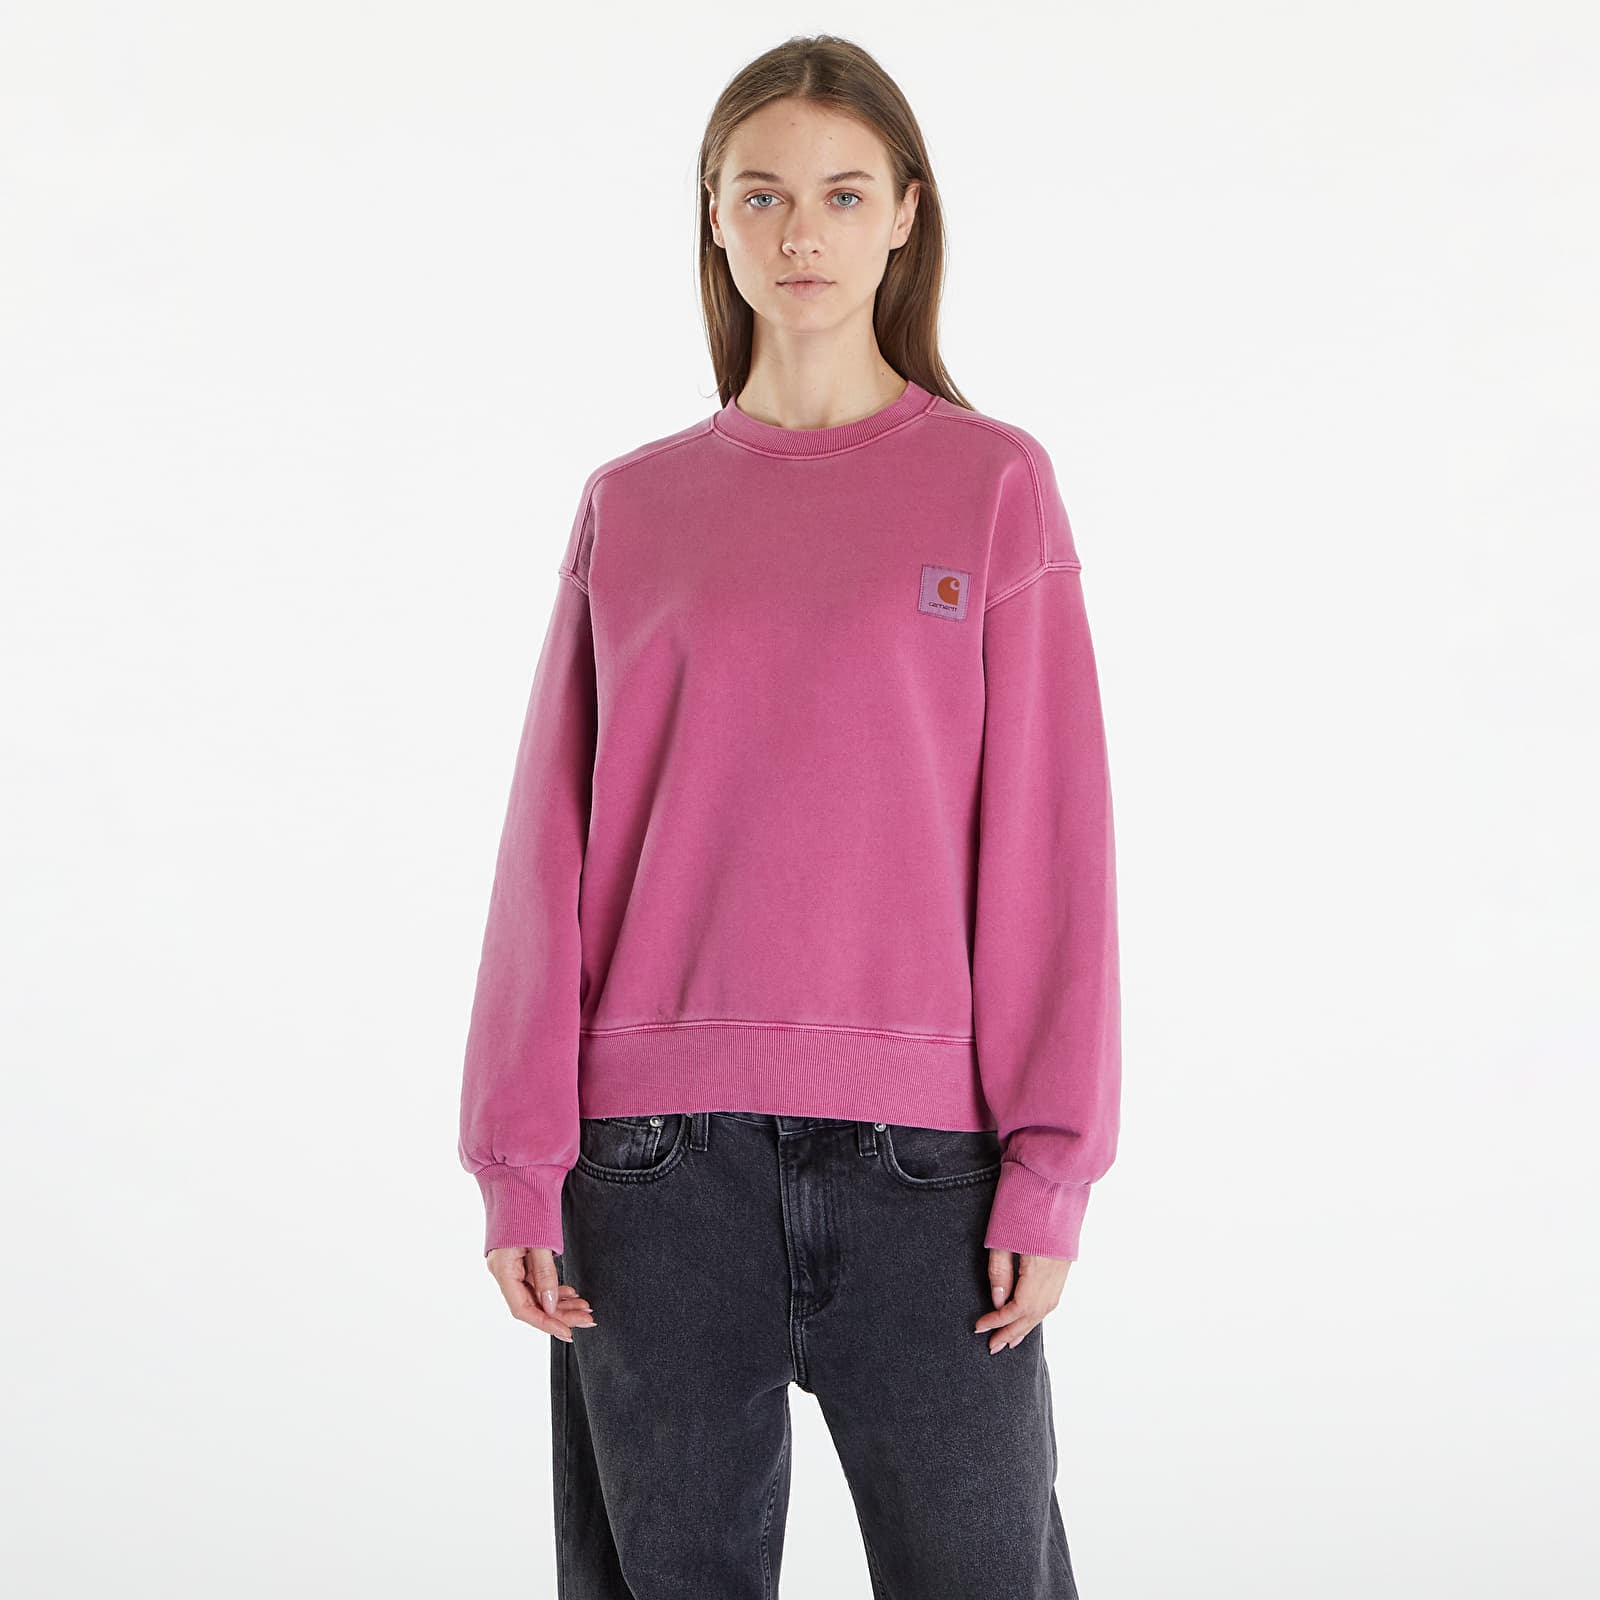 Carhartt WIP Nelson Sweatshirt UNISEX Magenta Garment Dyed